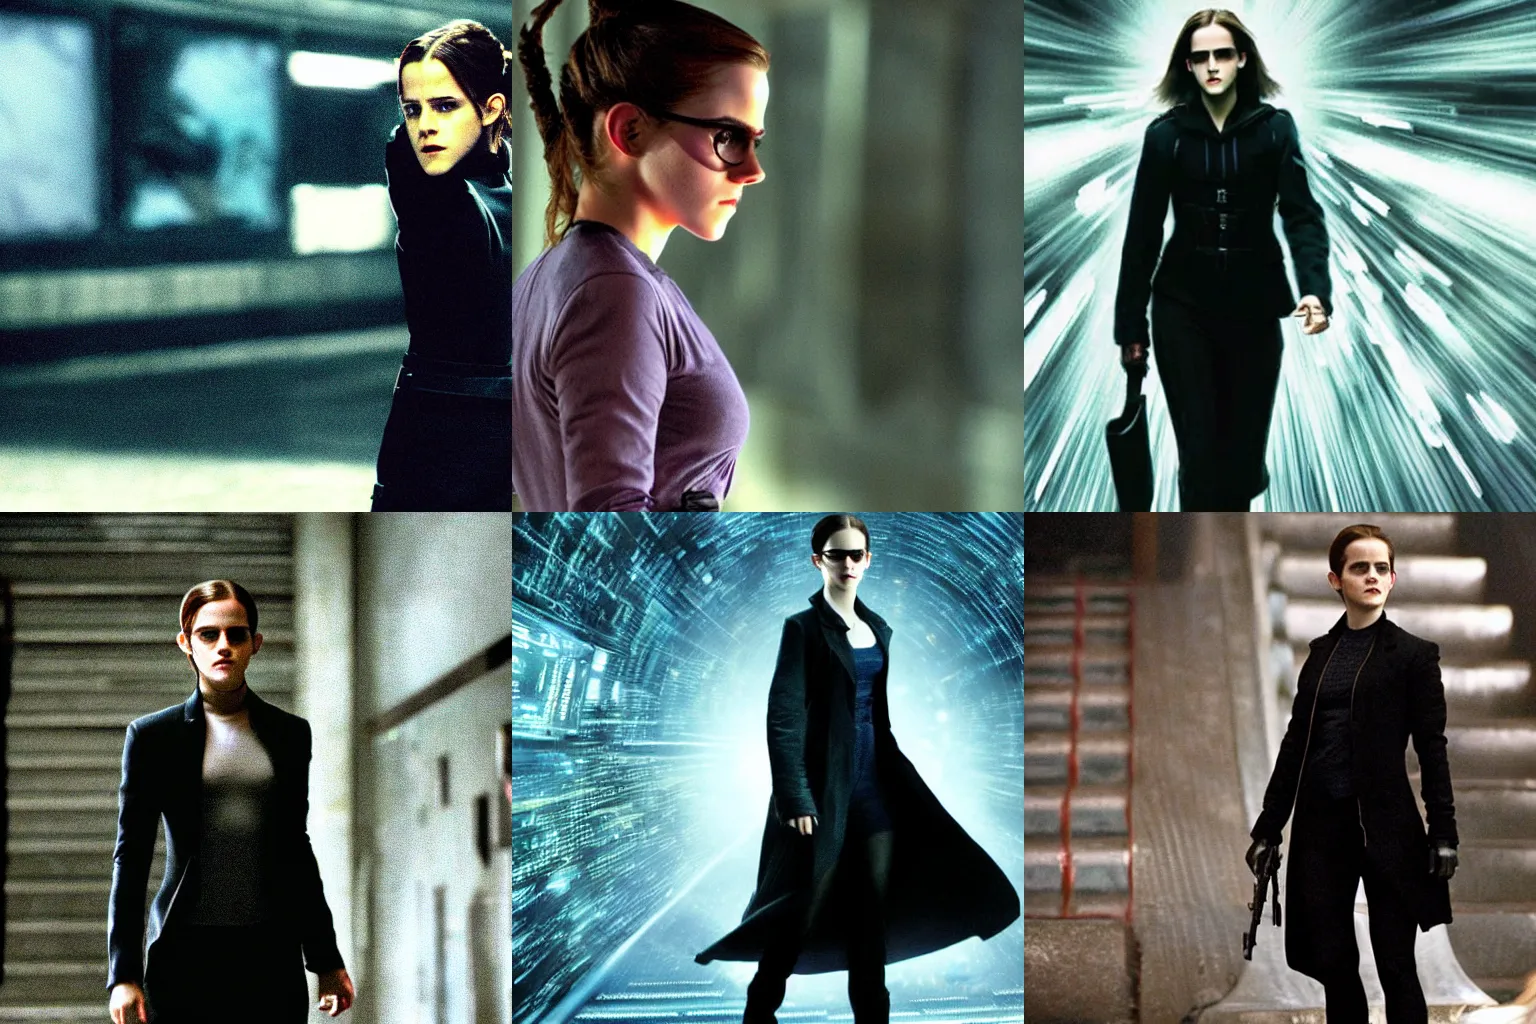 Prompt: Movie still of Emma Watson in Matrix